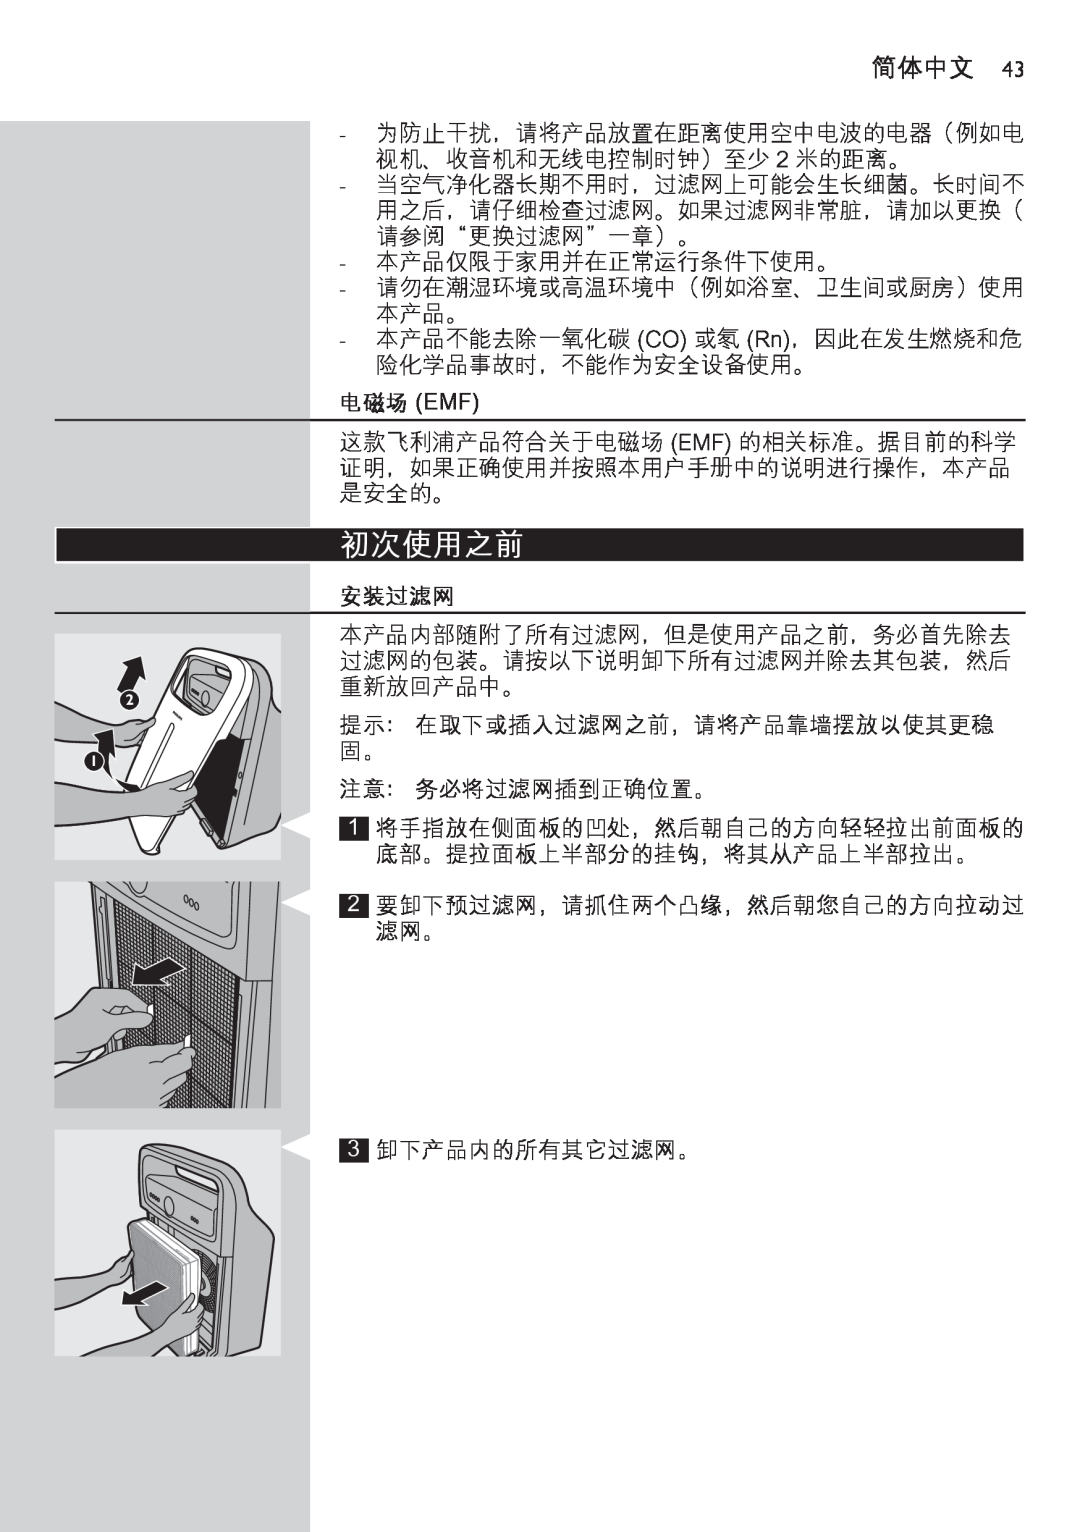 Philips AC4002 manual 初次使用之前, 电磁场 Emf, 安装过滤网, 简体中文 